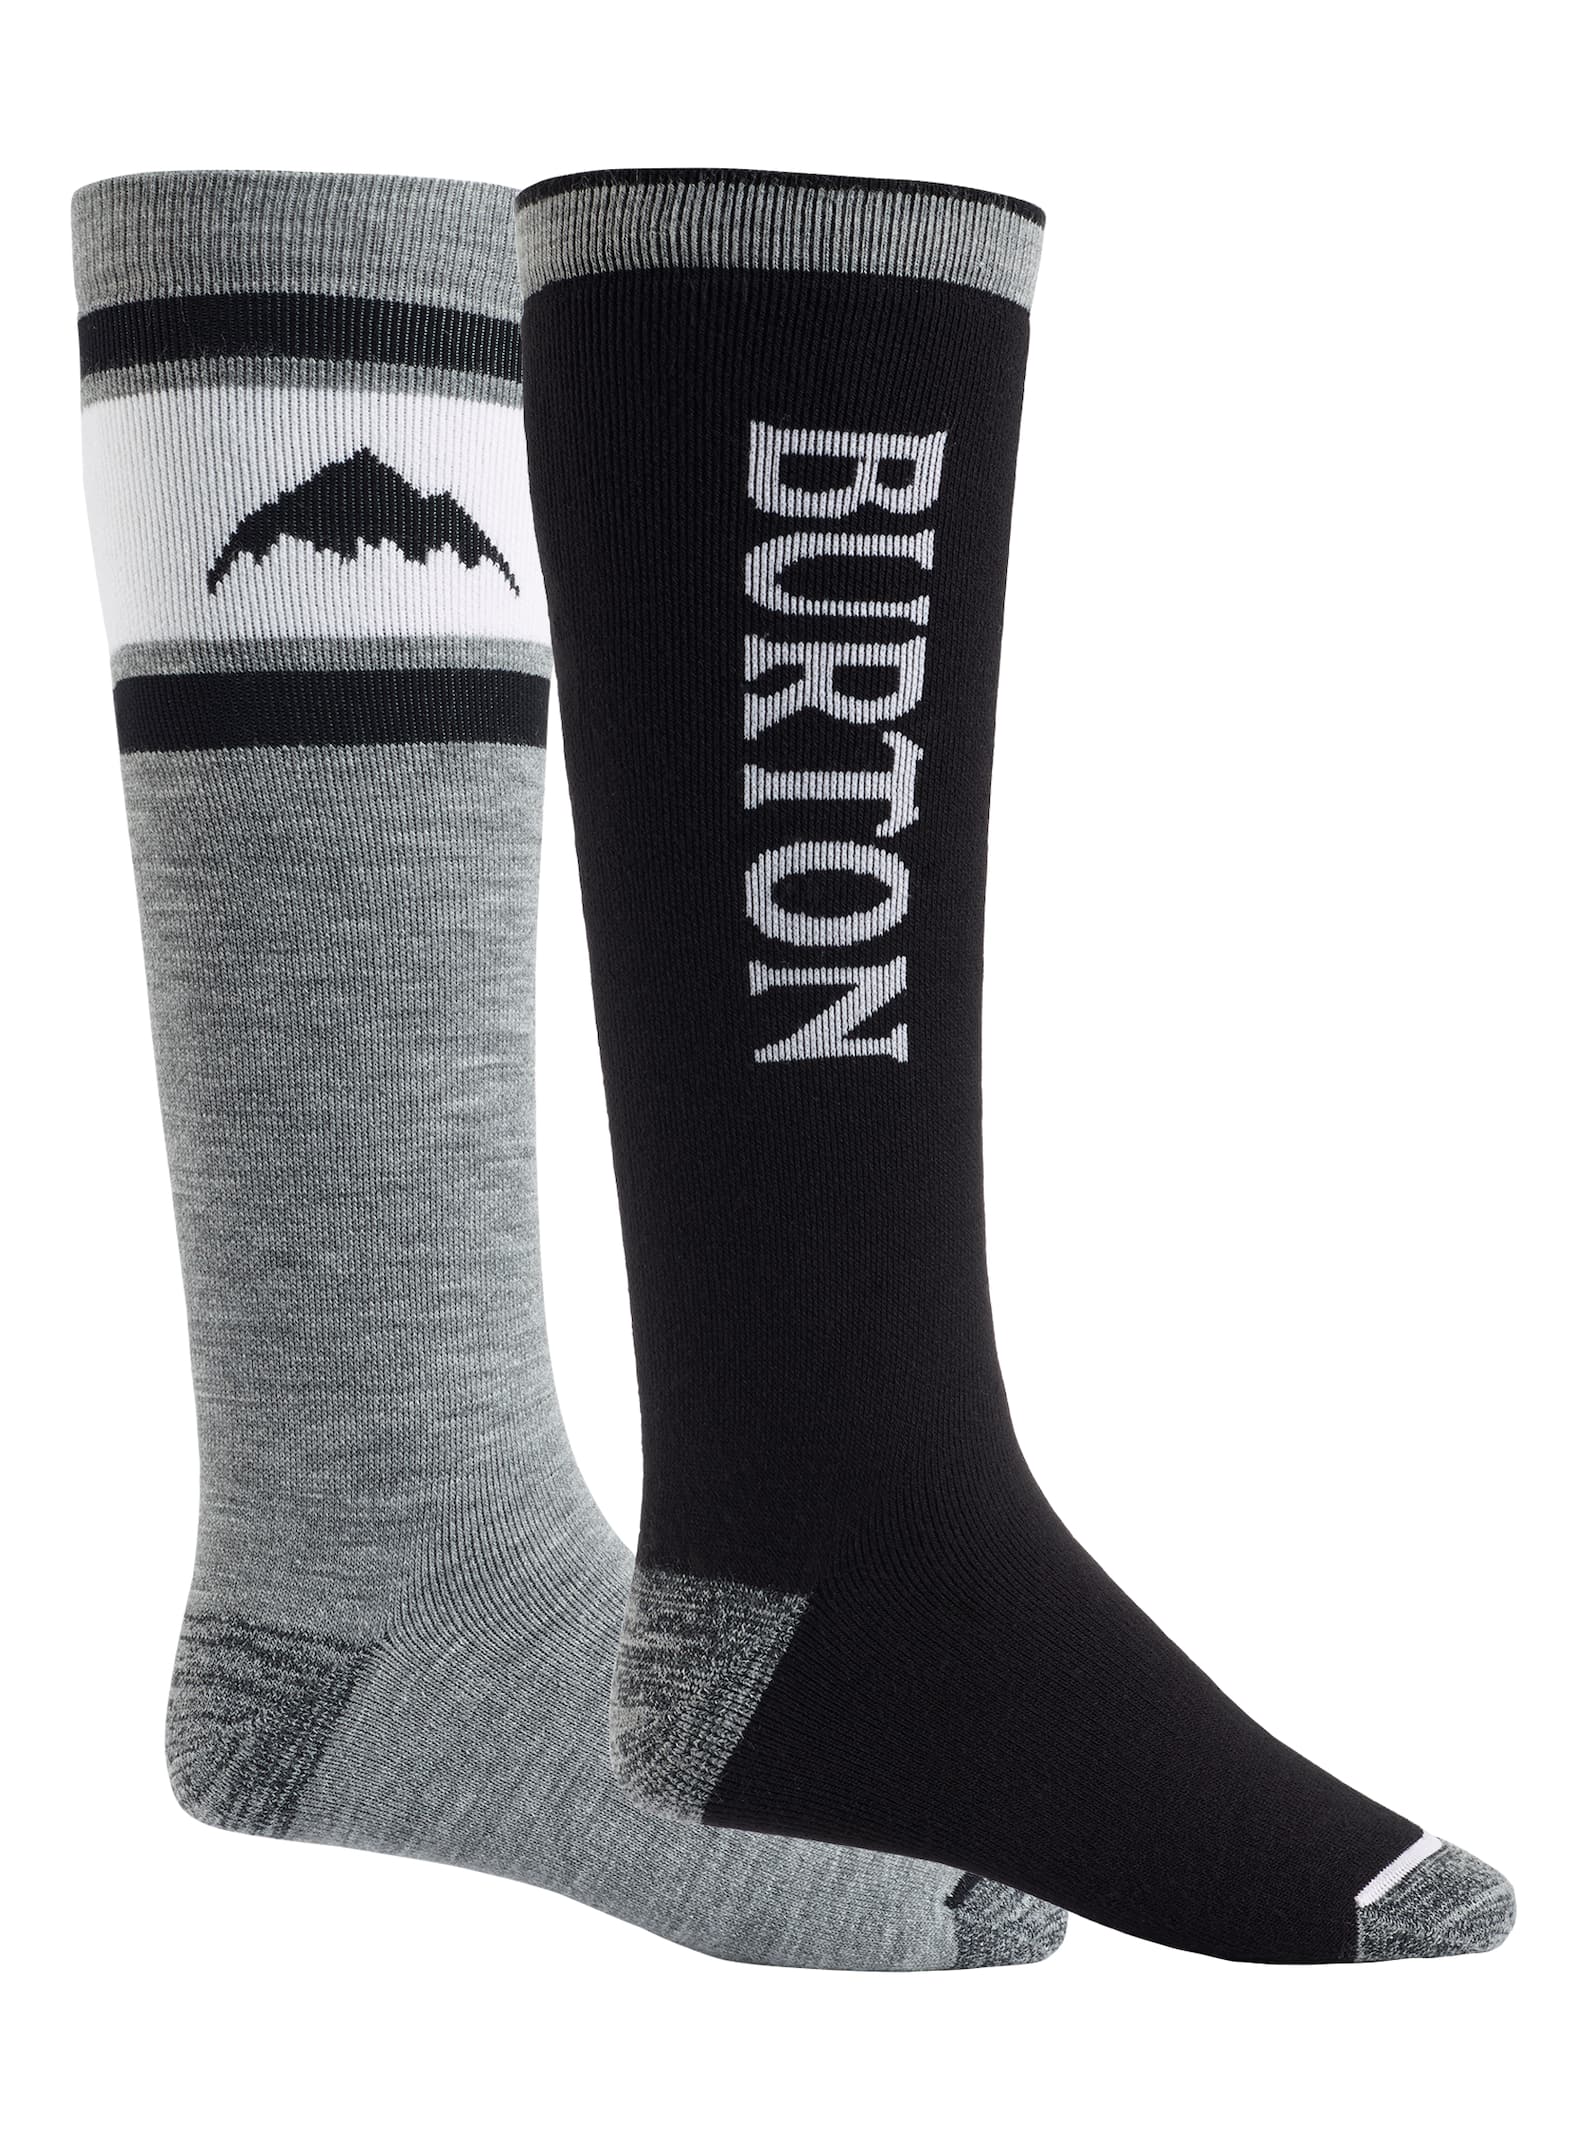 Men's Socks | Burton Snowboards US